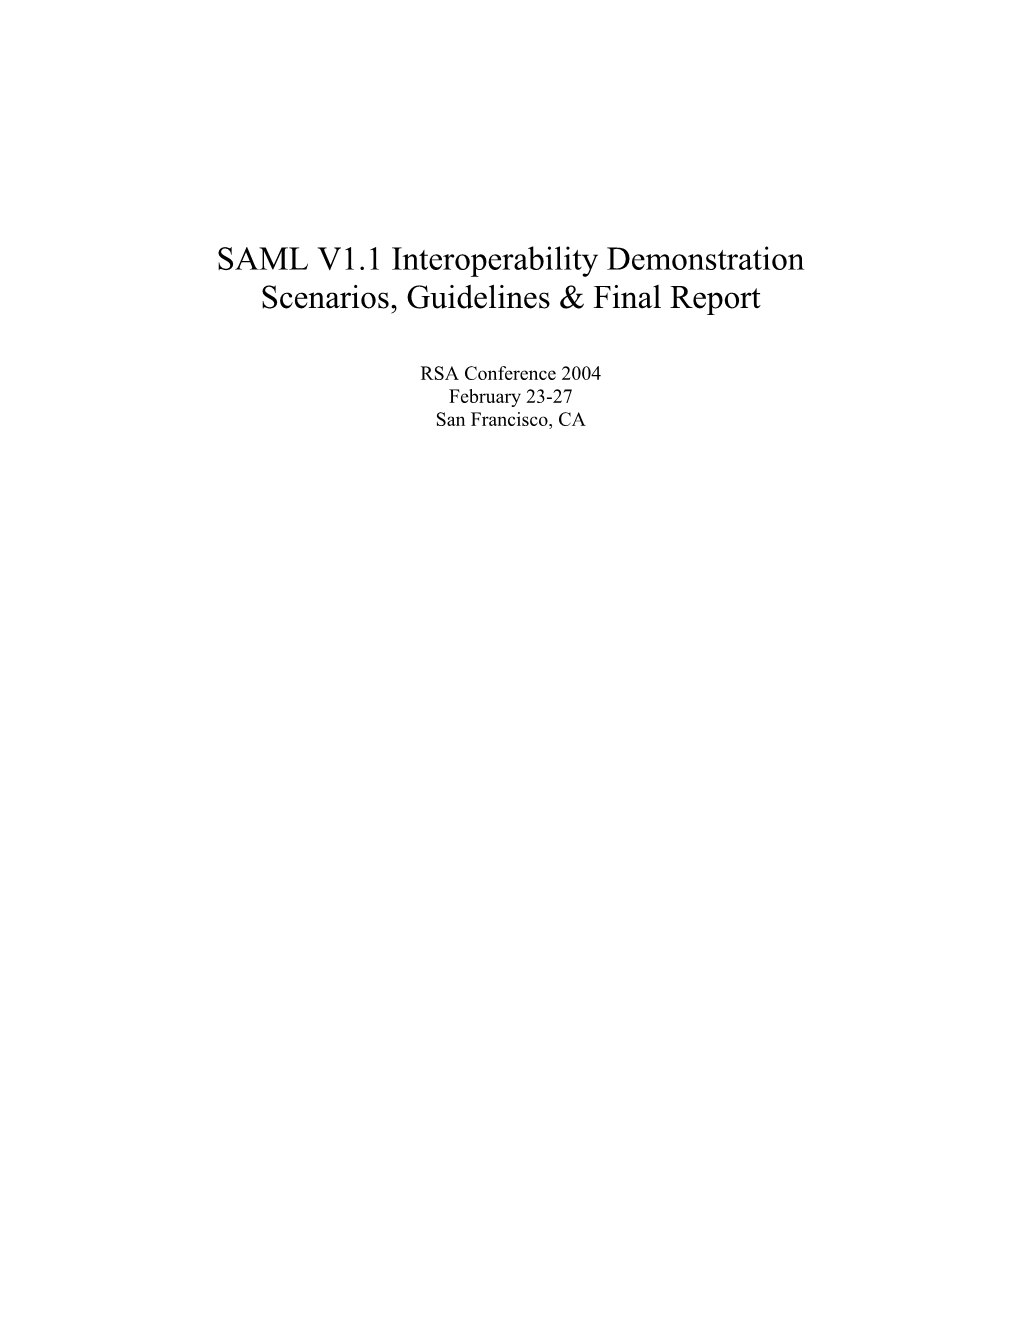 SAML V1.1 Interoperability Demonstration Scenarios,Guidelines & Final Report